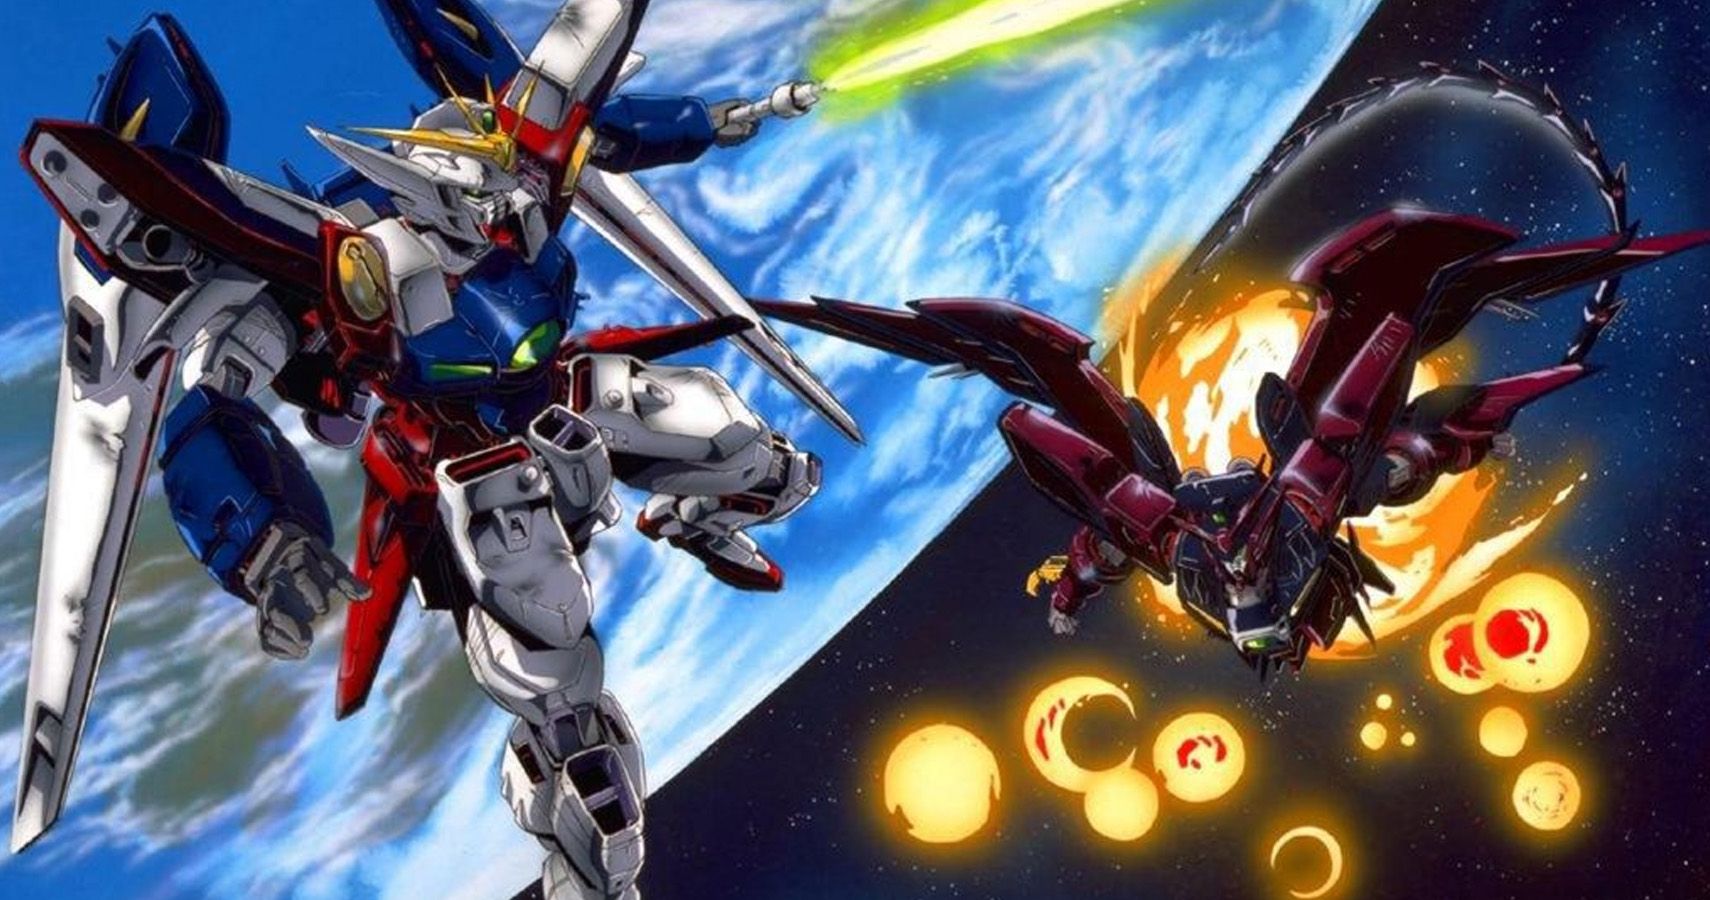 Gundam Wing' Blu-Ray Review: Overly Dramatic But Still Visually Impressive